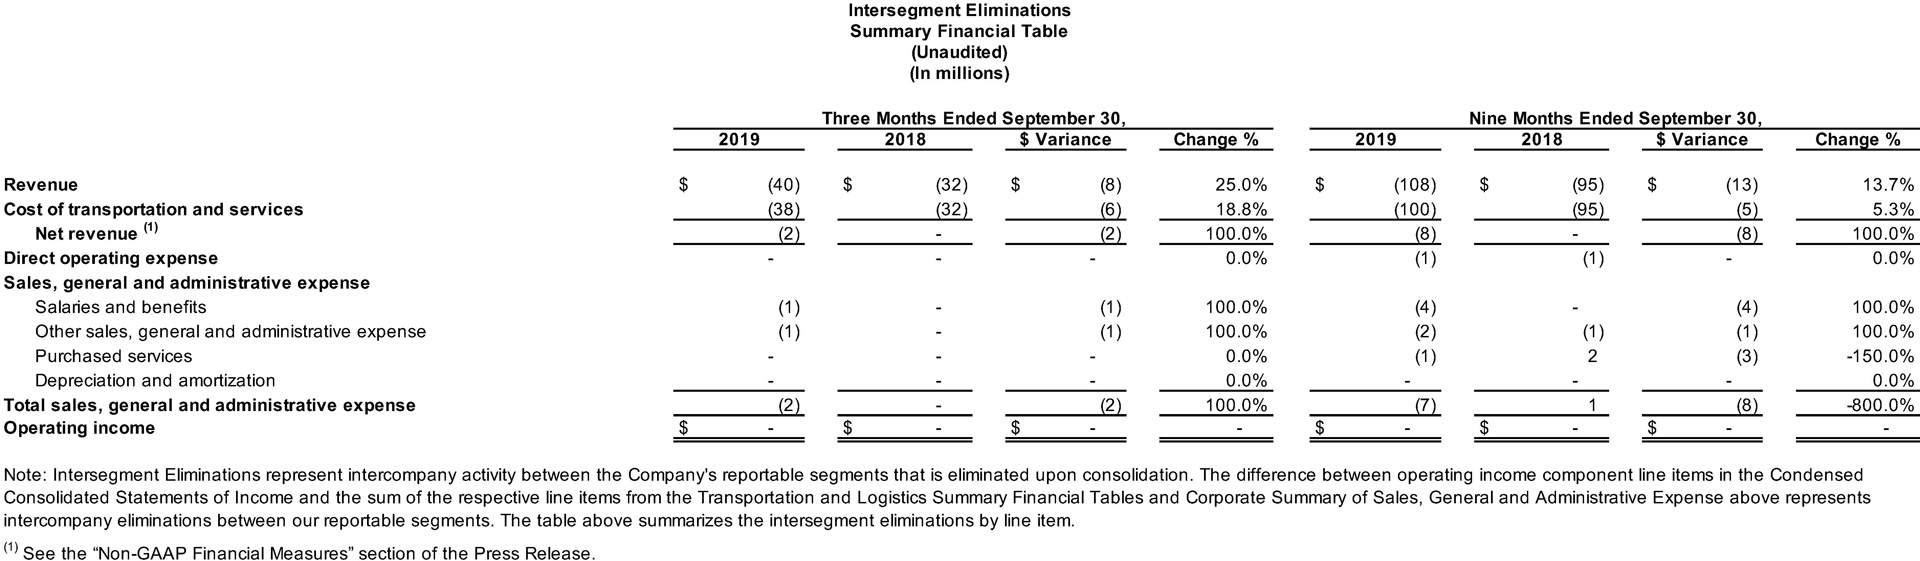 Intersegment Eliminations Summary Financial Table